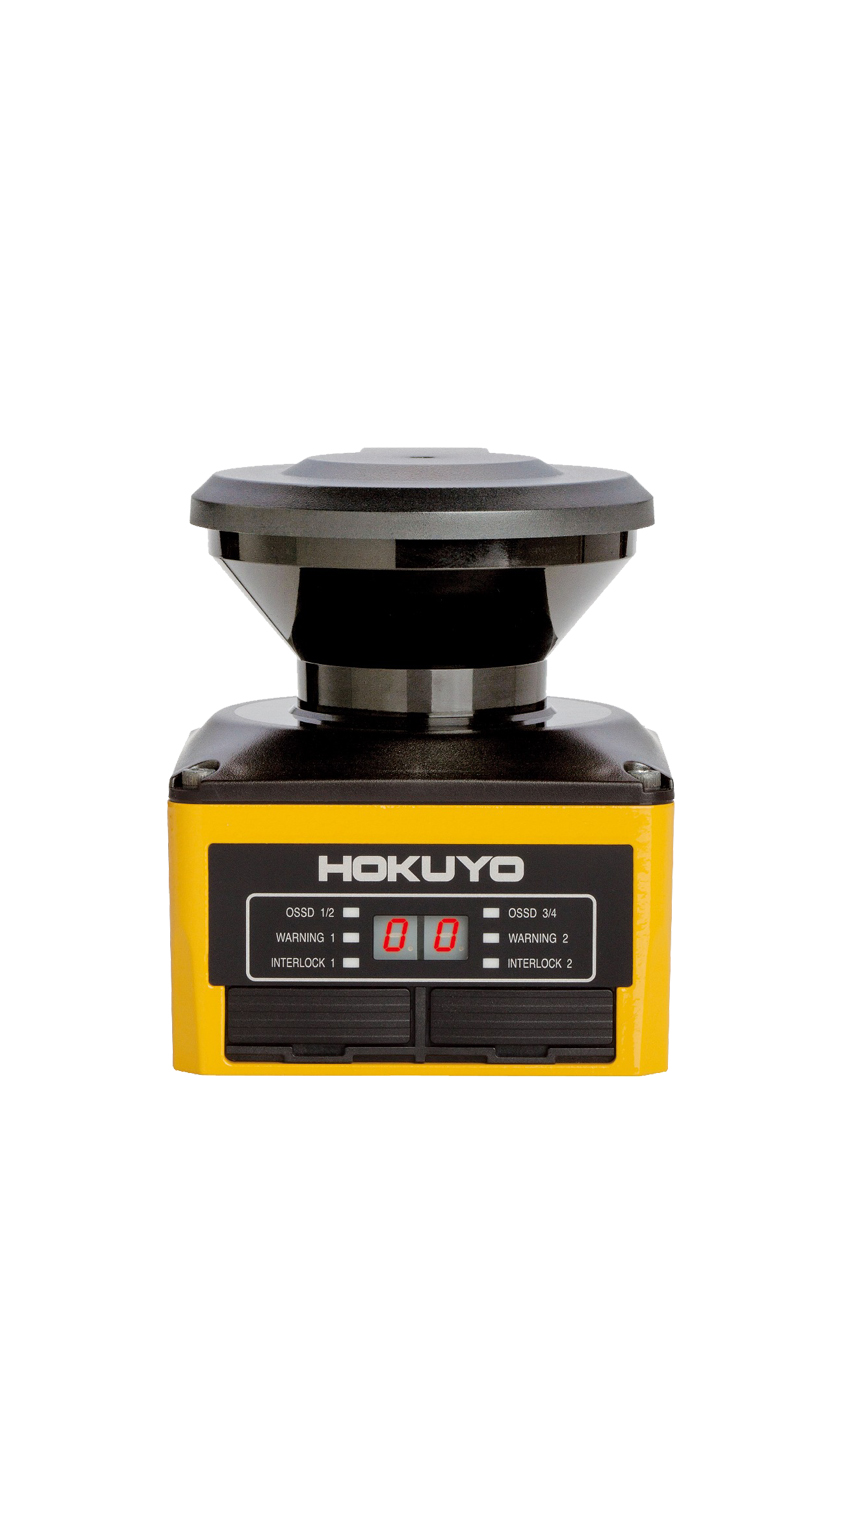 veiligheids laserscanner hokuyo uam-05lp